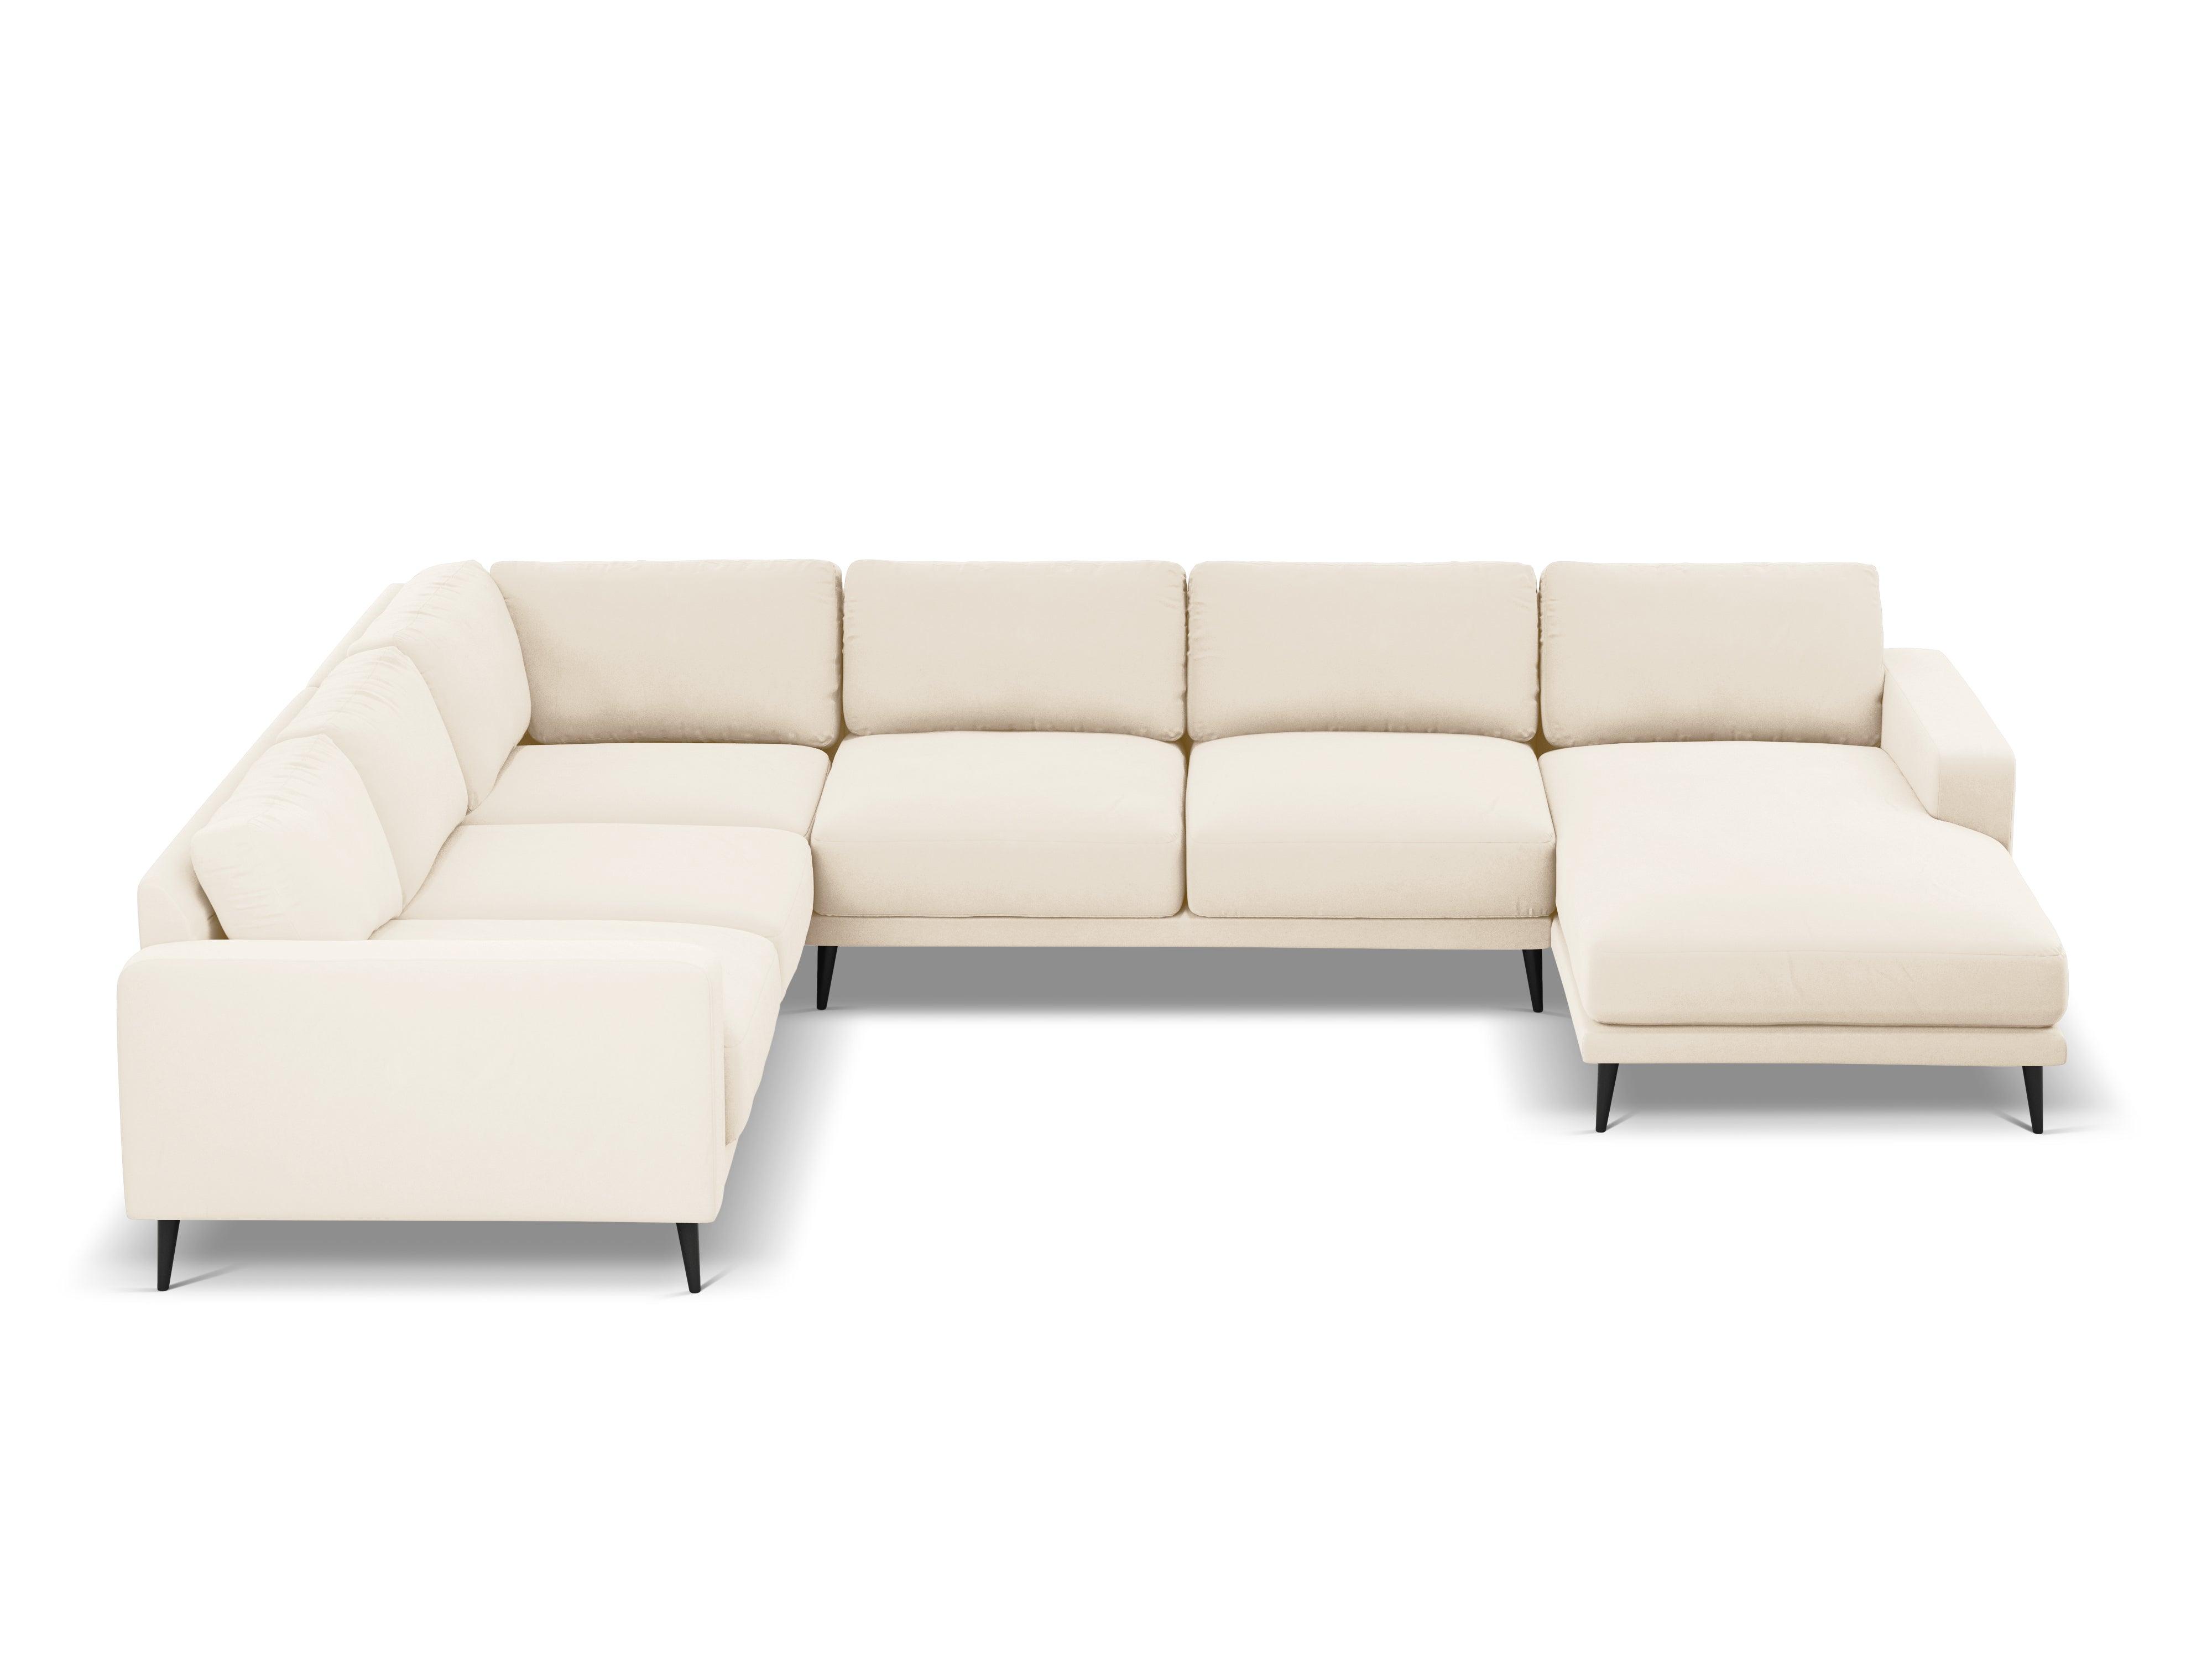 Velvet Panoramic Left Corner Sofa, "Kylie", 7 Seats, 306x236x80
Made in Europe, Micadoni, Eye on Design